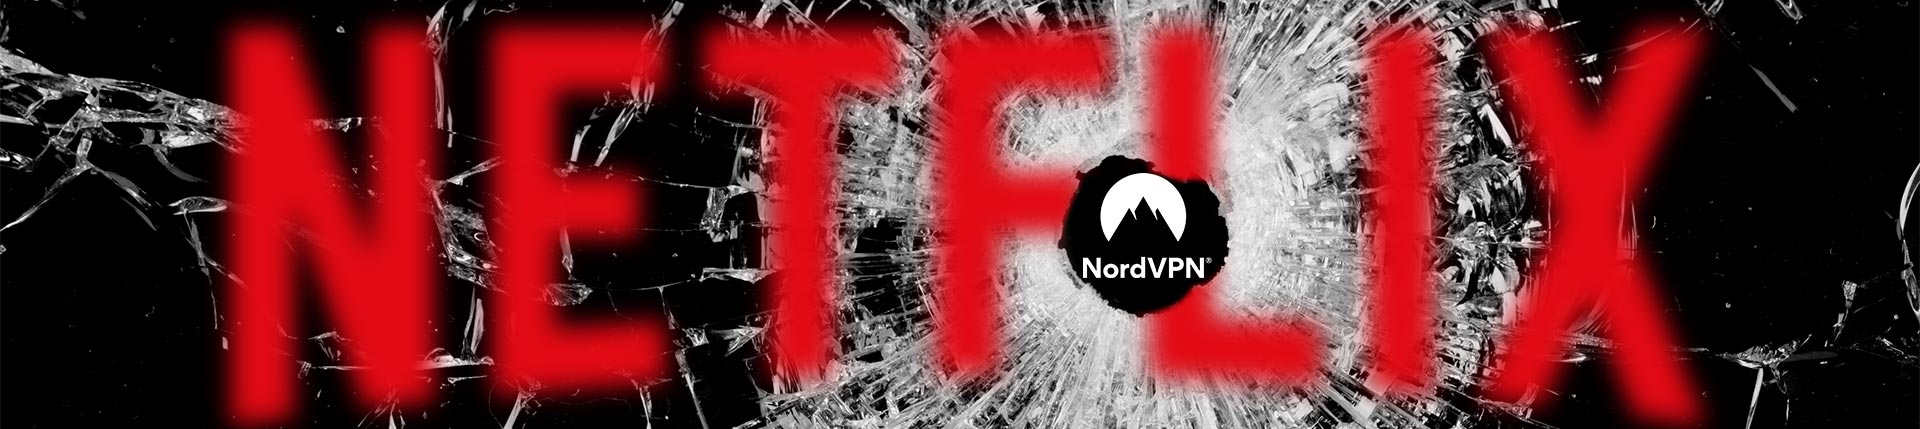 NordVPN with Netflix